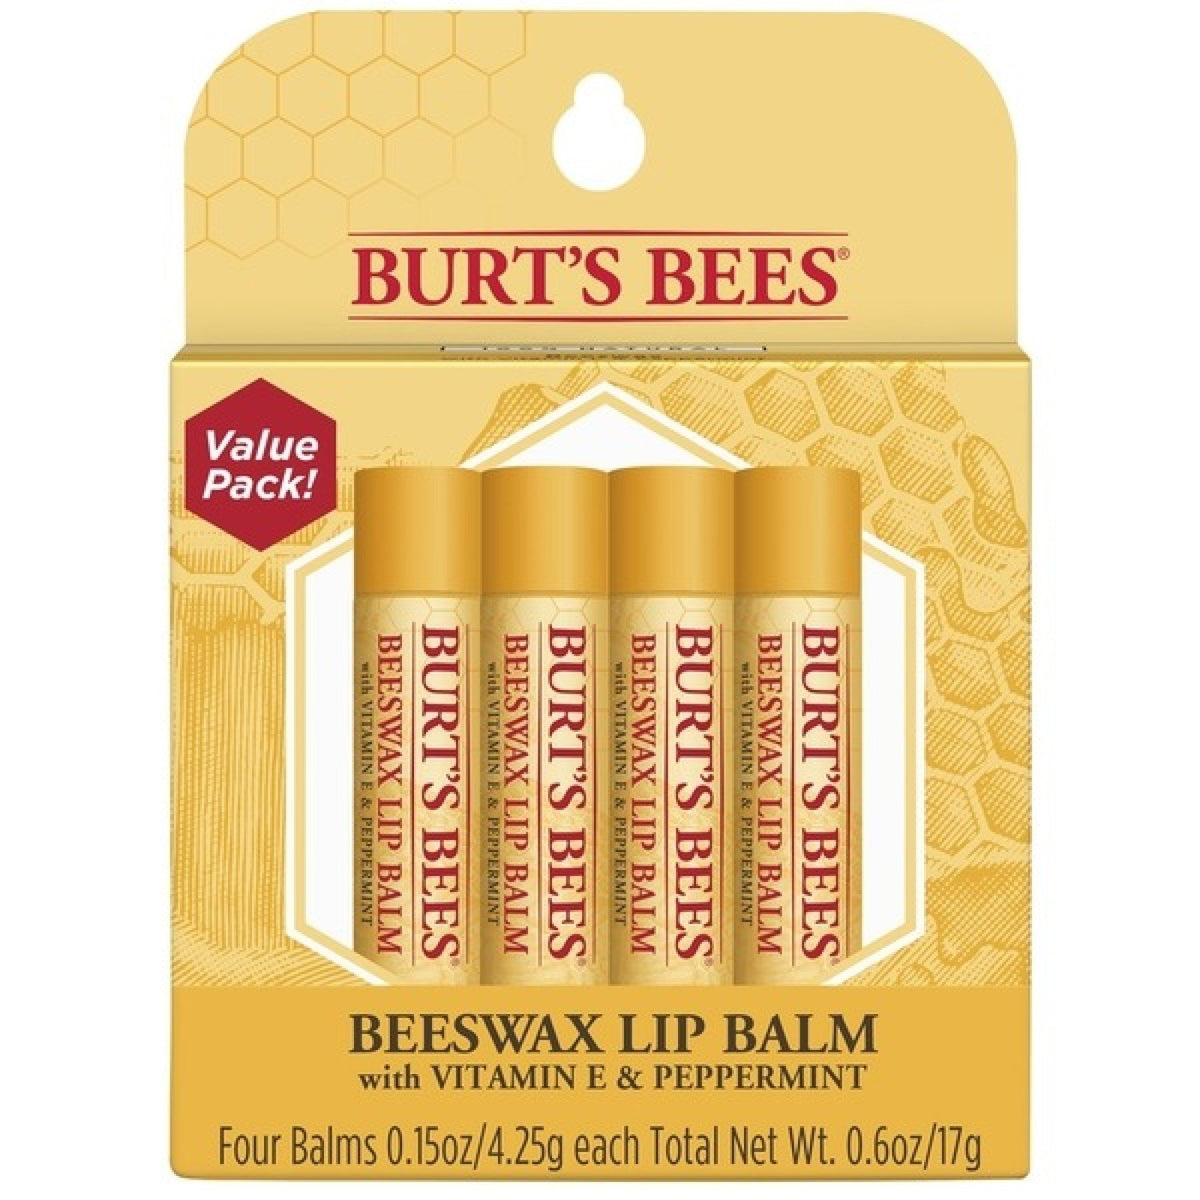 Burt's Bees Beeswax Lip Balm - Reviews